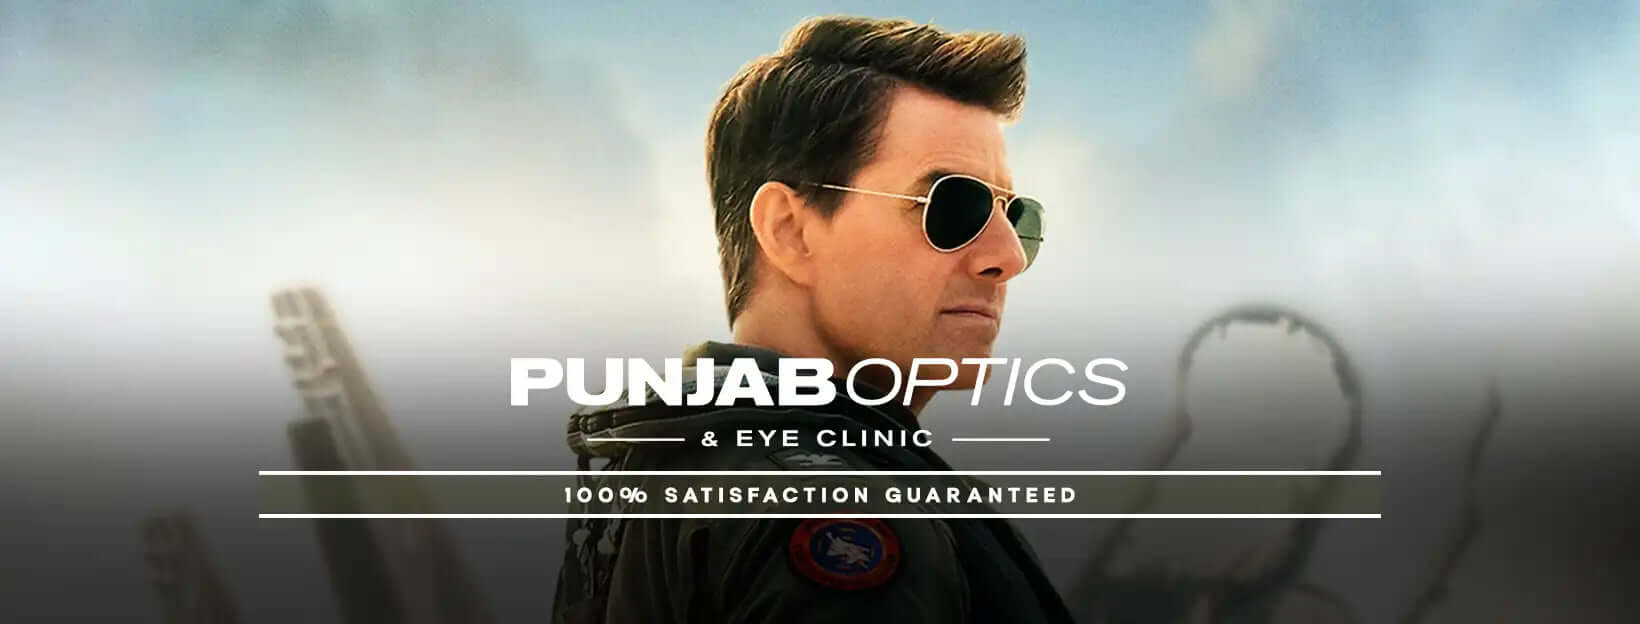 Why Punjab Optics?